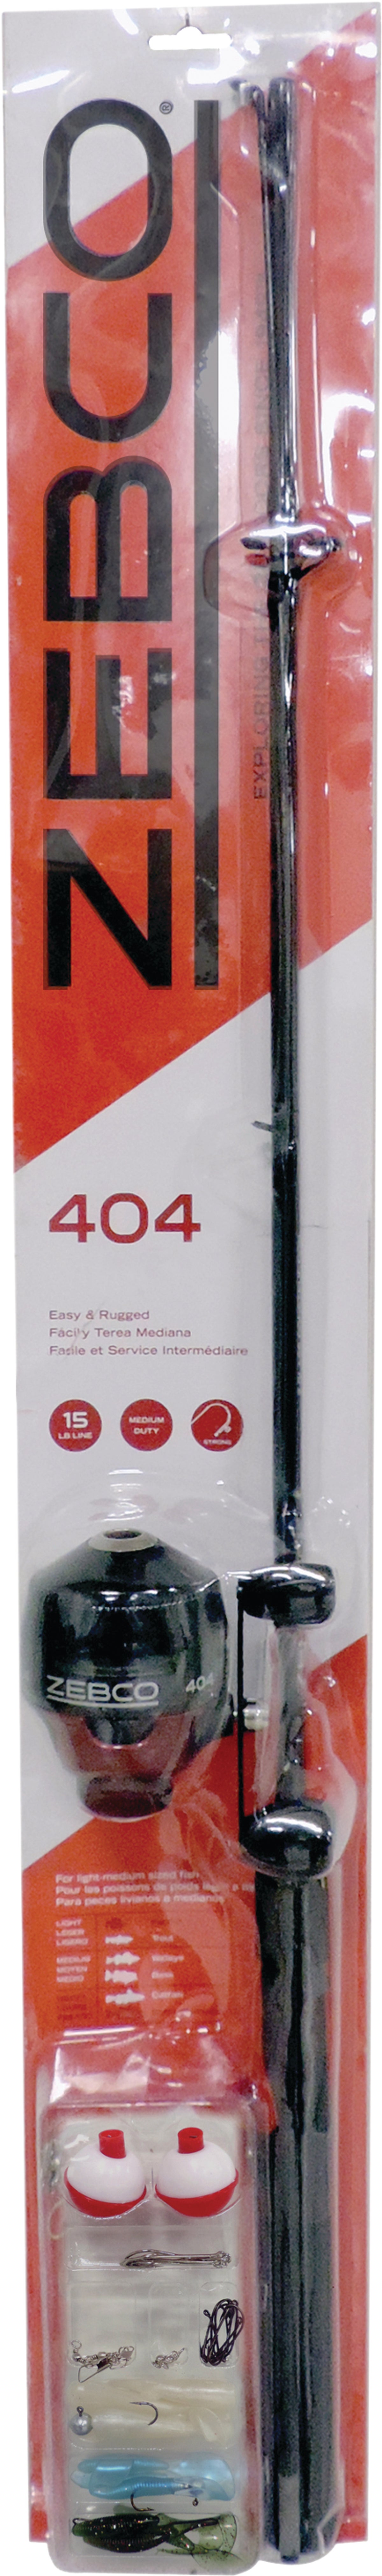 Zebco 404 Fishing Rod & Spincast Reel